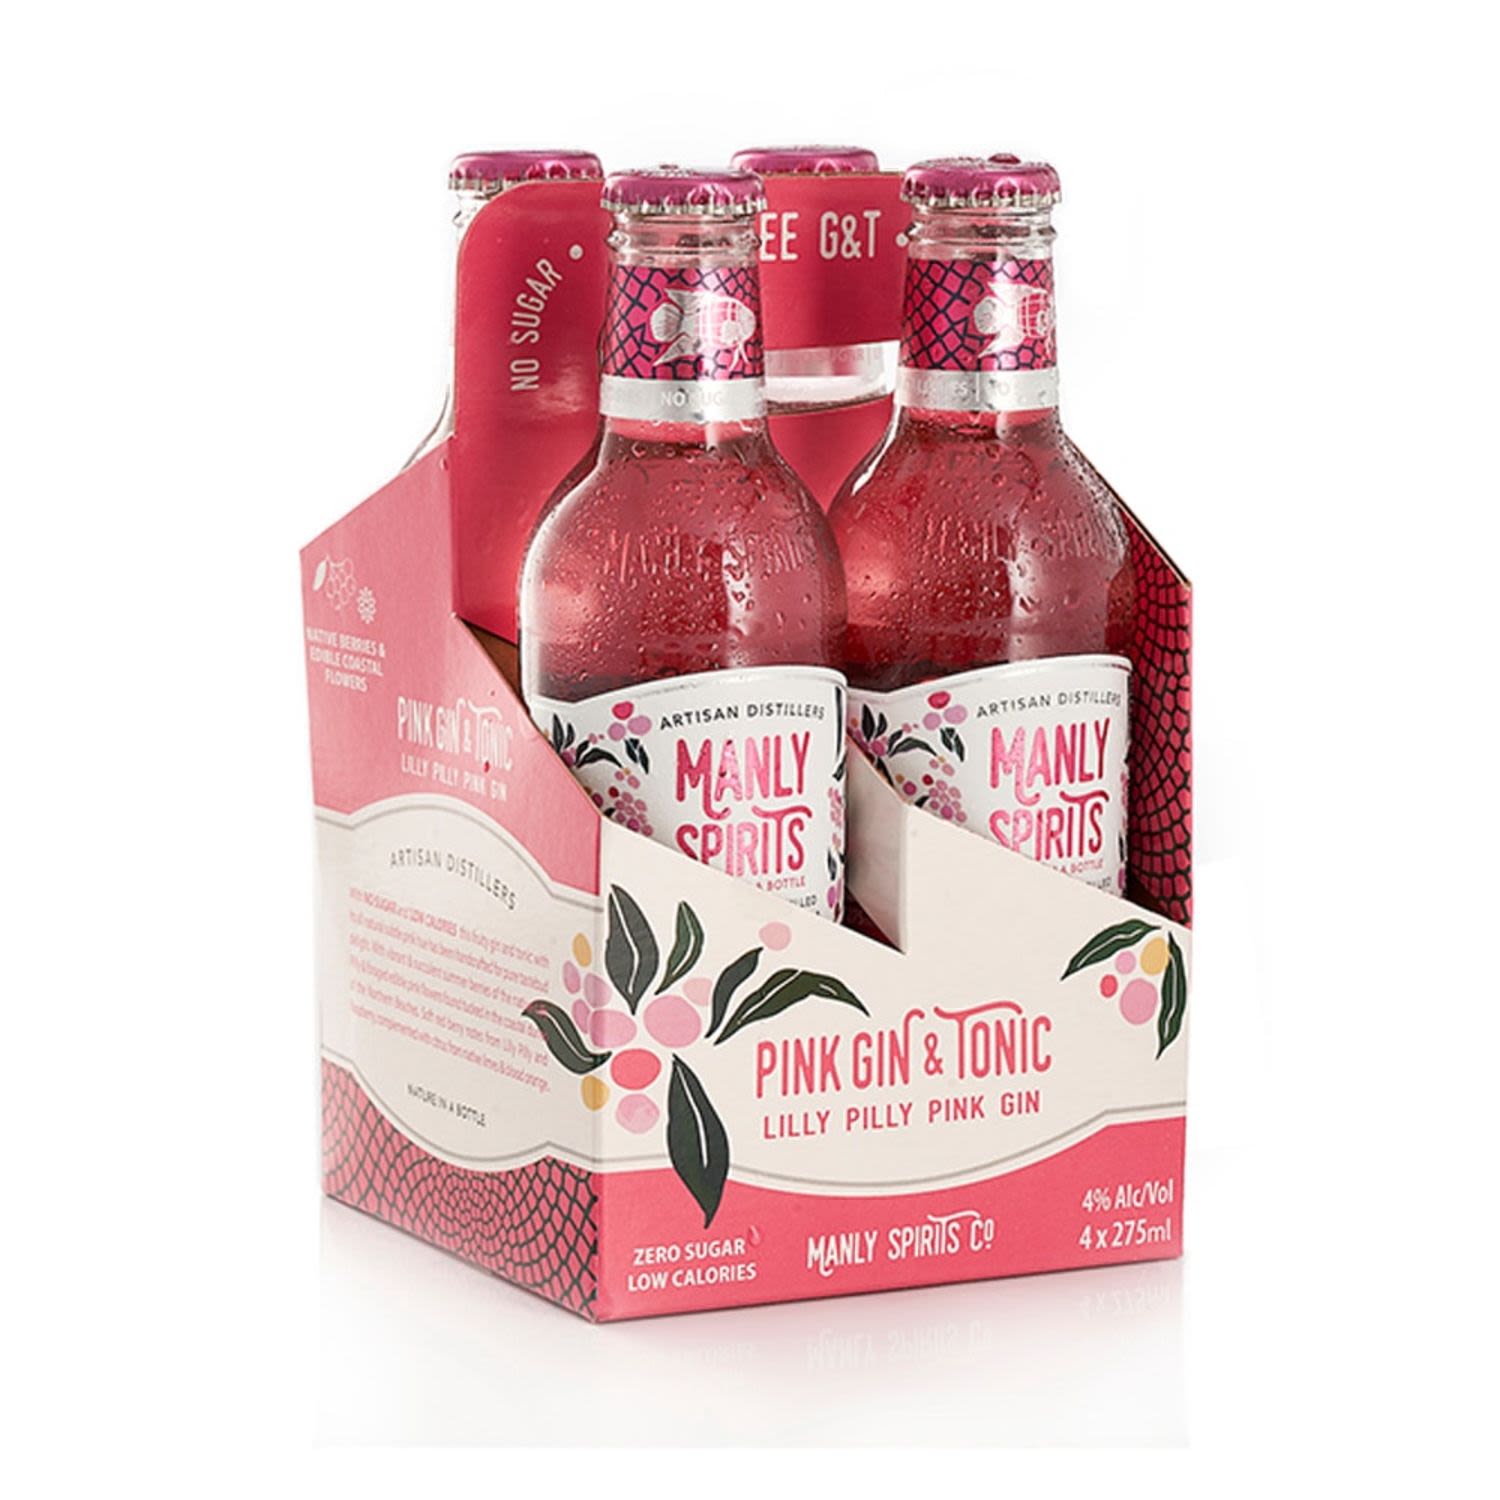 Manly Spirits Pink Gin & Tonic Bottle 275mL 4 Pack